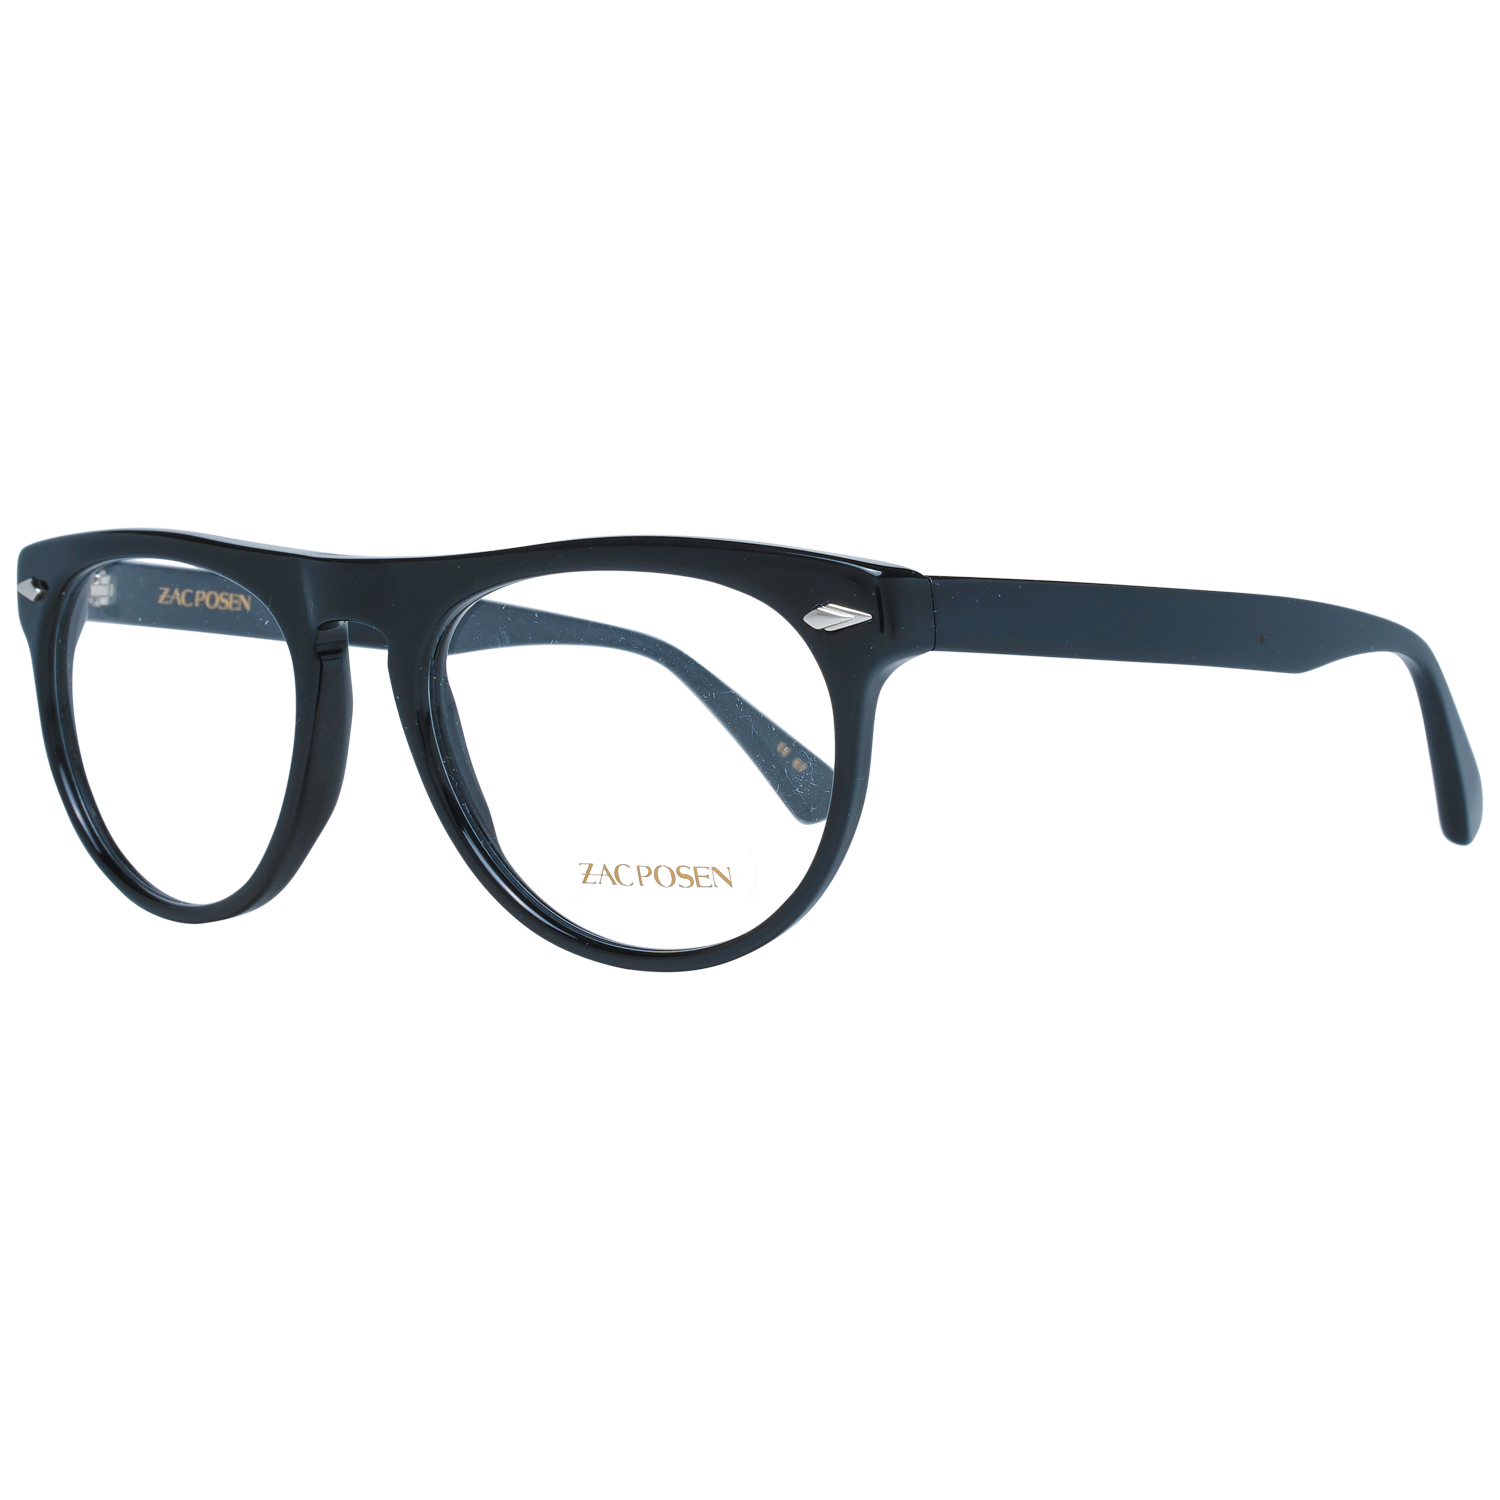 Zac Posen Frames Zac Posen Optical Frame ZIDE BK 53 Idealist Eyeglasses Eyewear UK USA Australia 